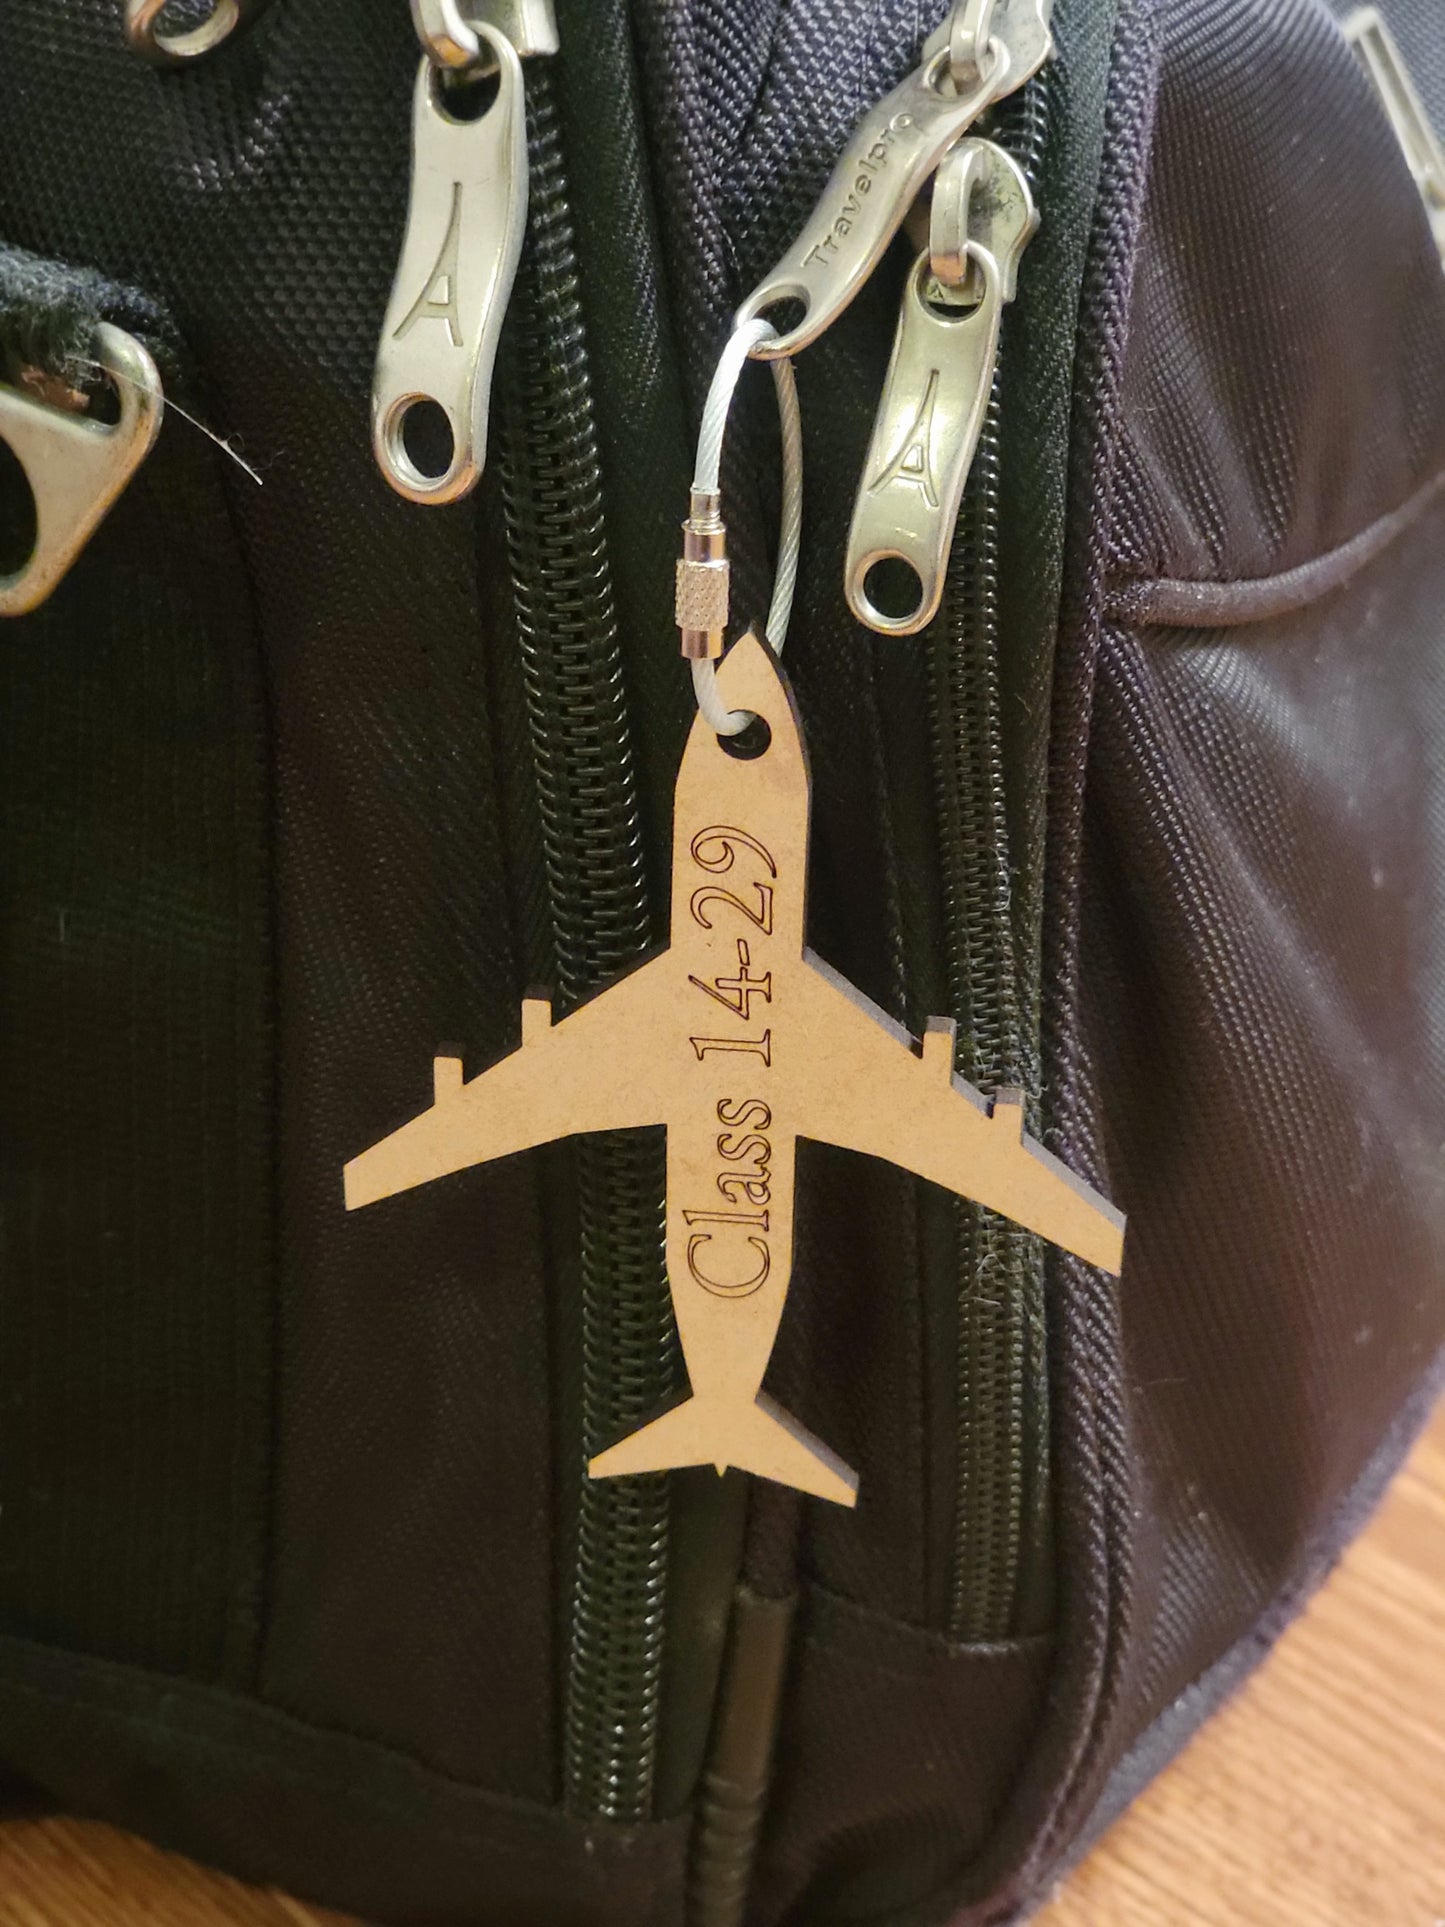 Plane with Class/Custom Text Bag Tag